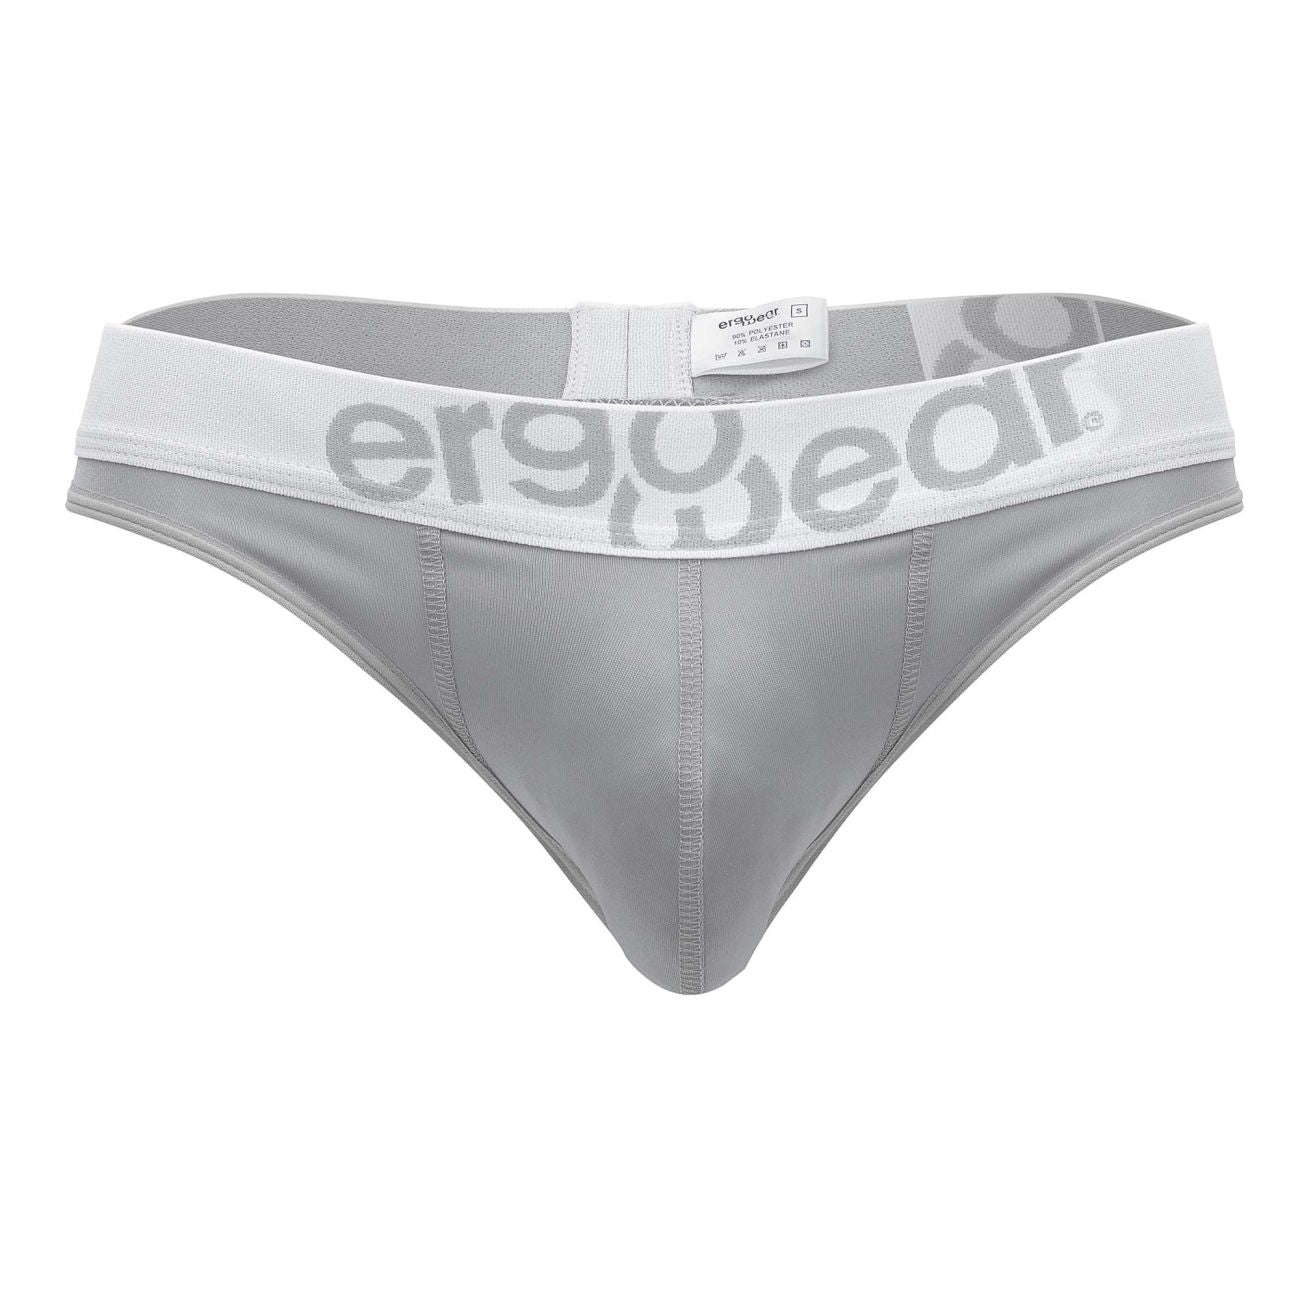 ErgoWear EW1365 HIP Thongs Mid Gray